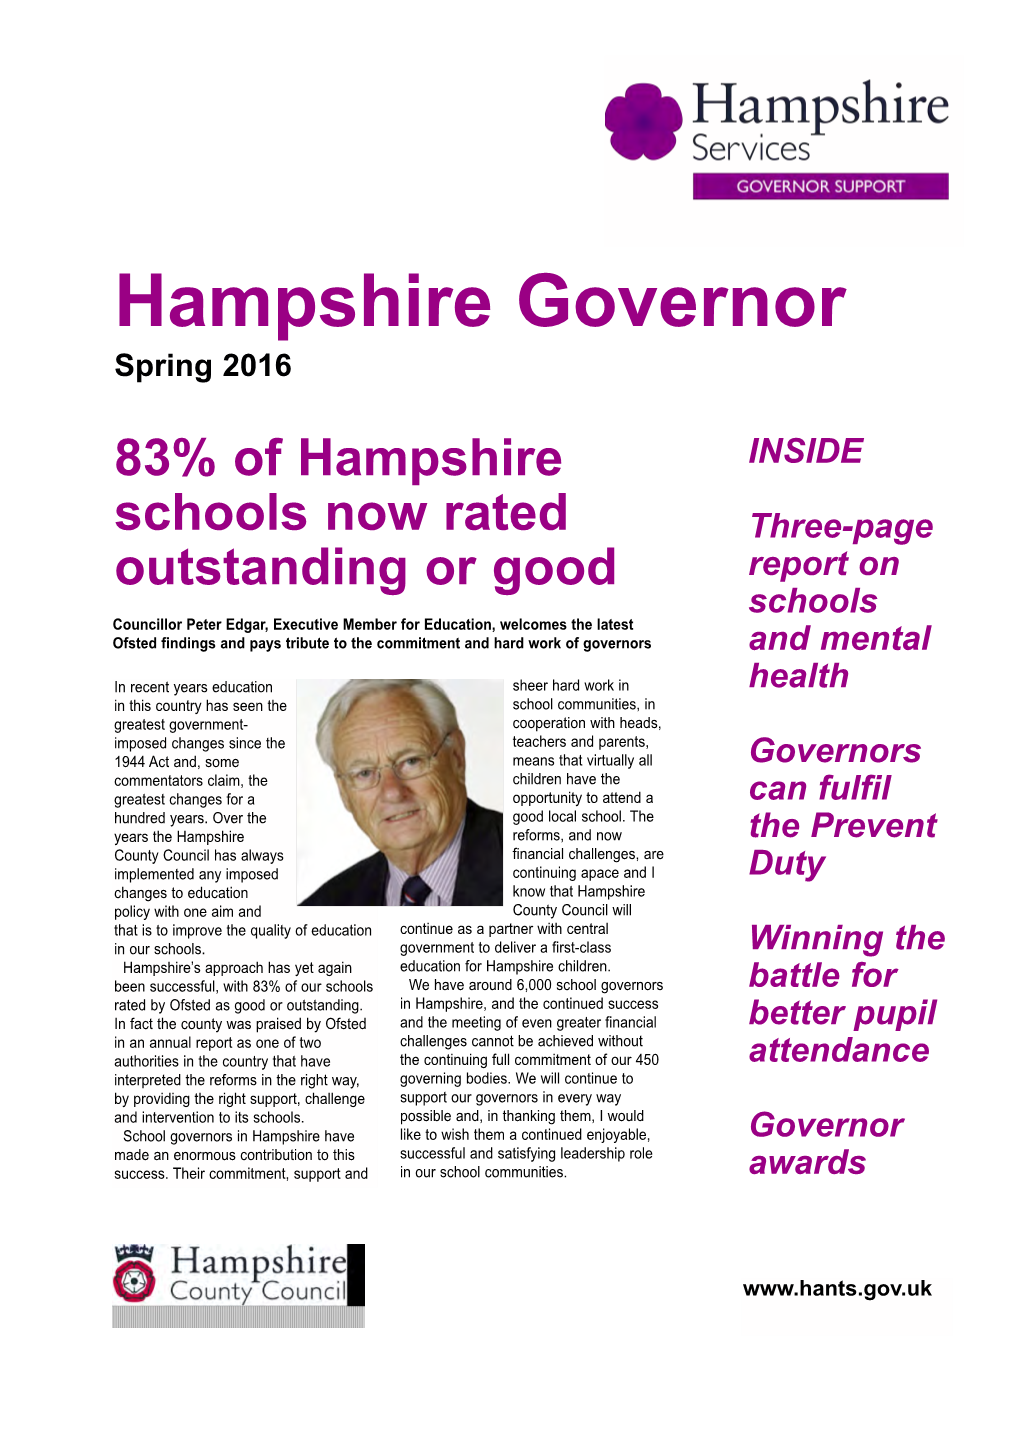 Hampshire Governor Spring 2016